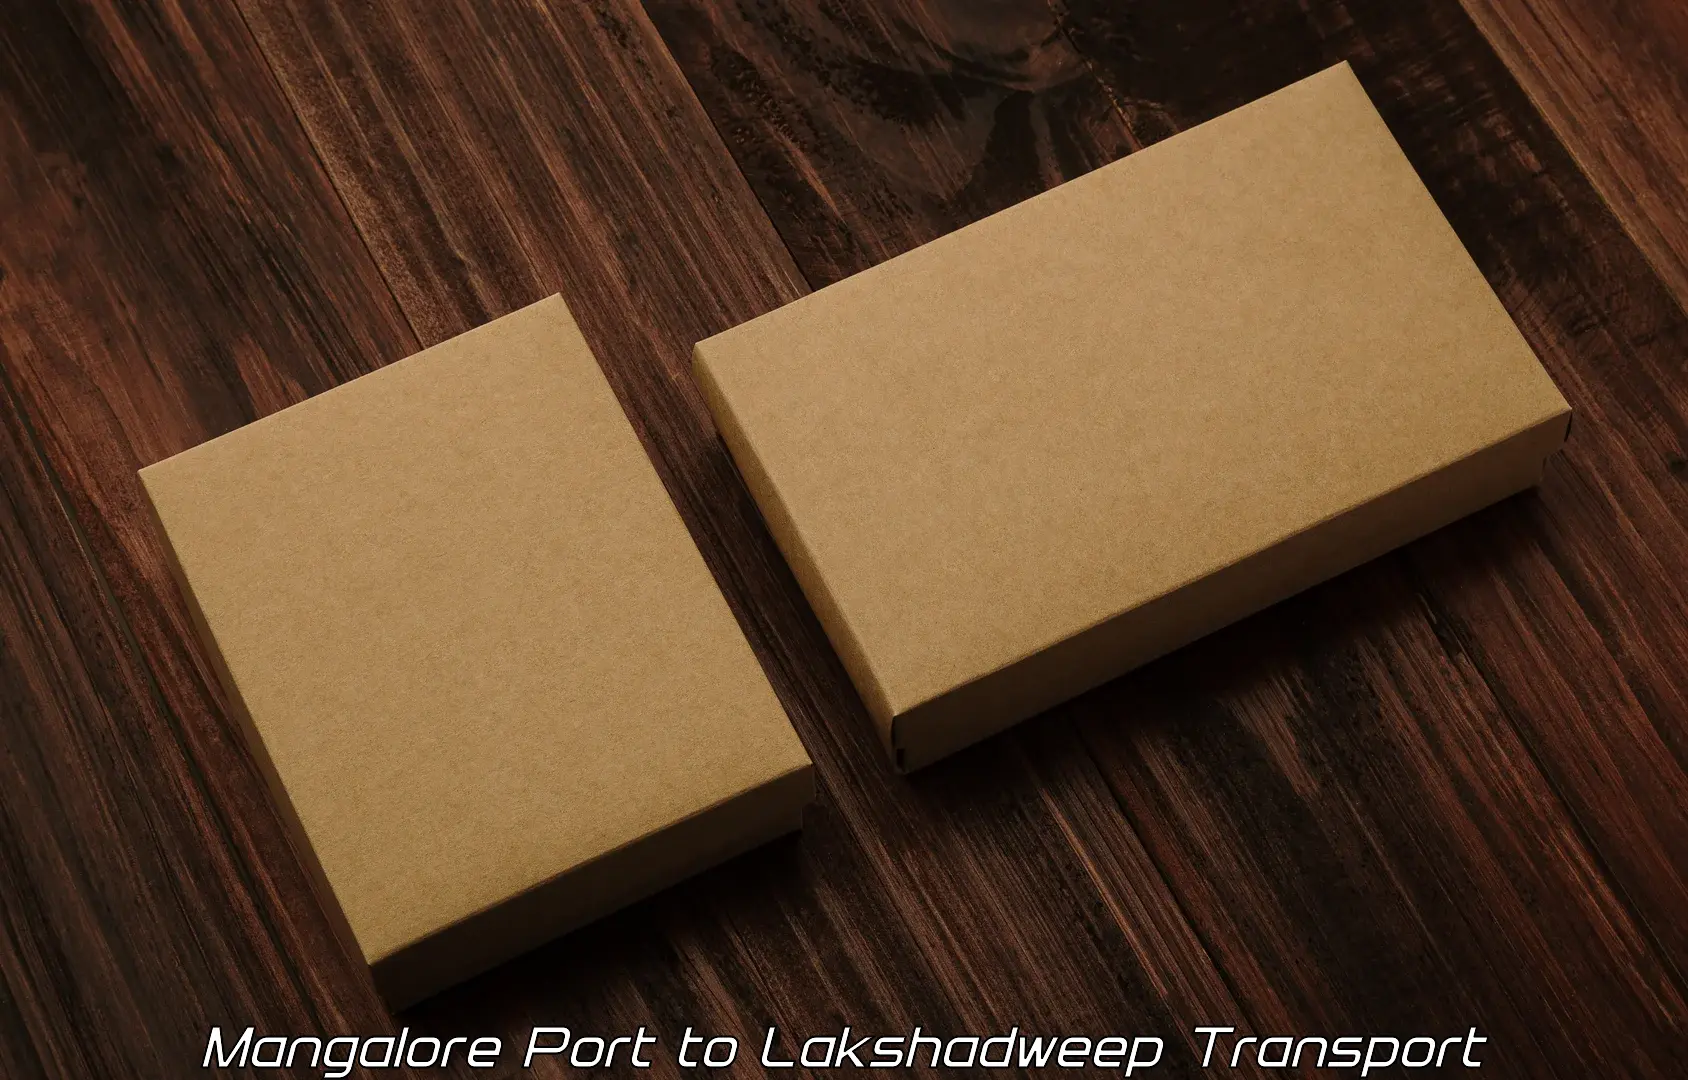 Transport in sharing Mangalore Port to Lakshadweep